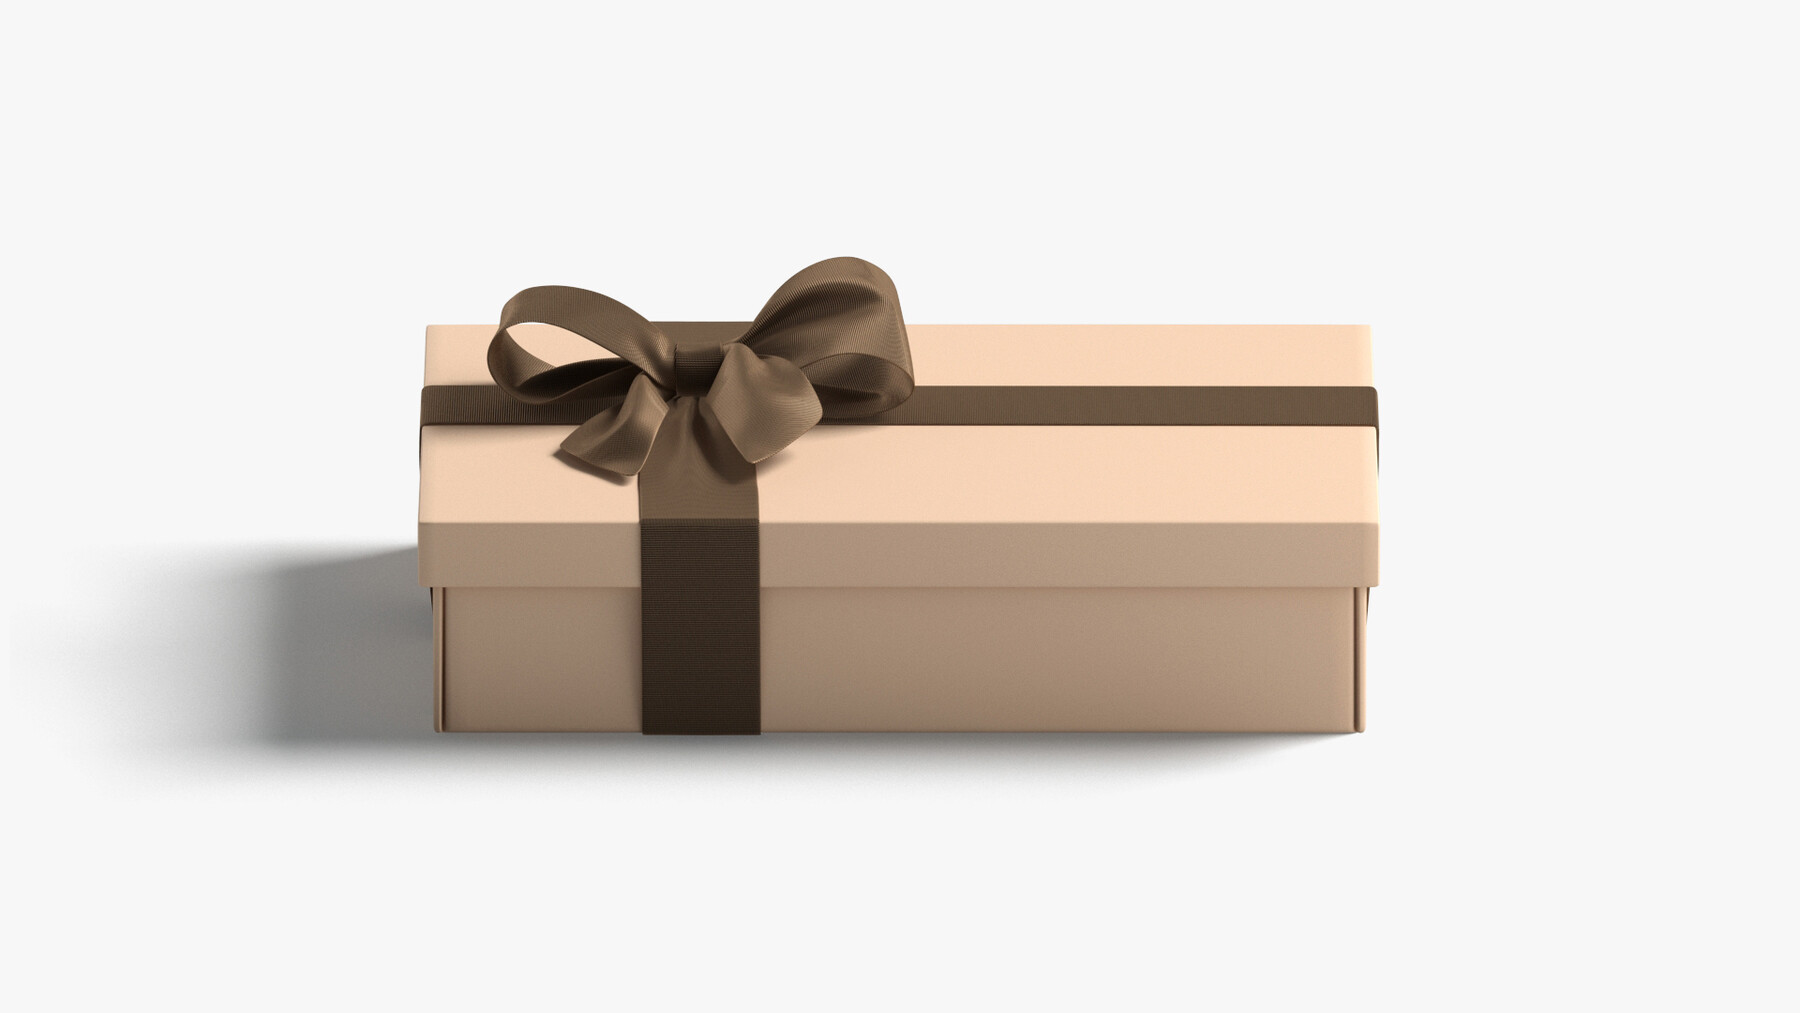 ArtStation - Gift boxes set - 6 box shapes | Resources